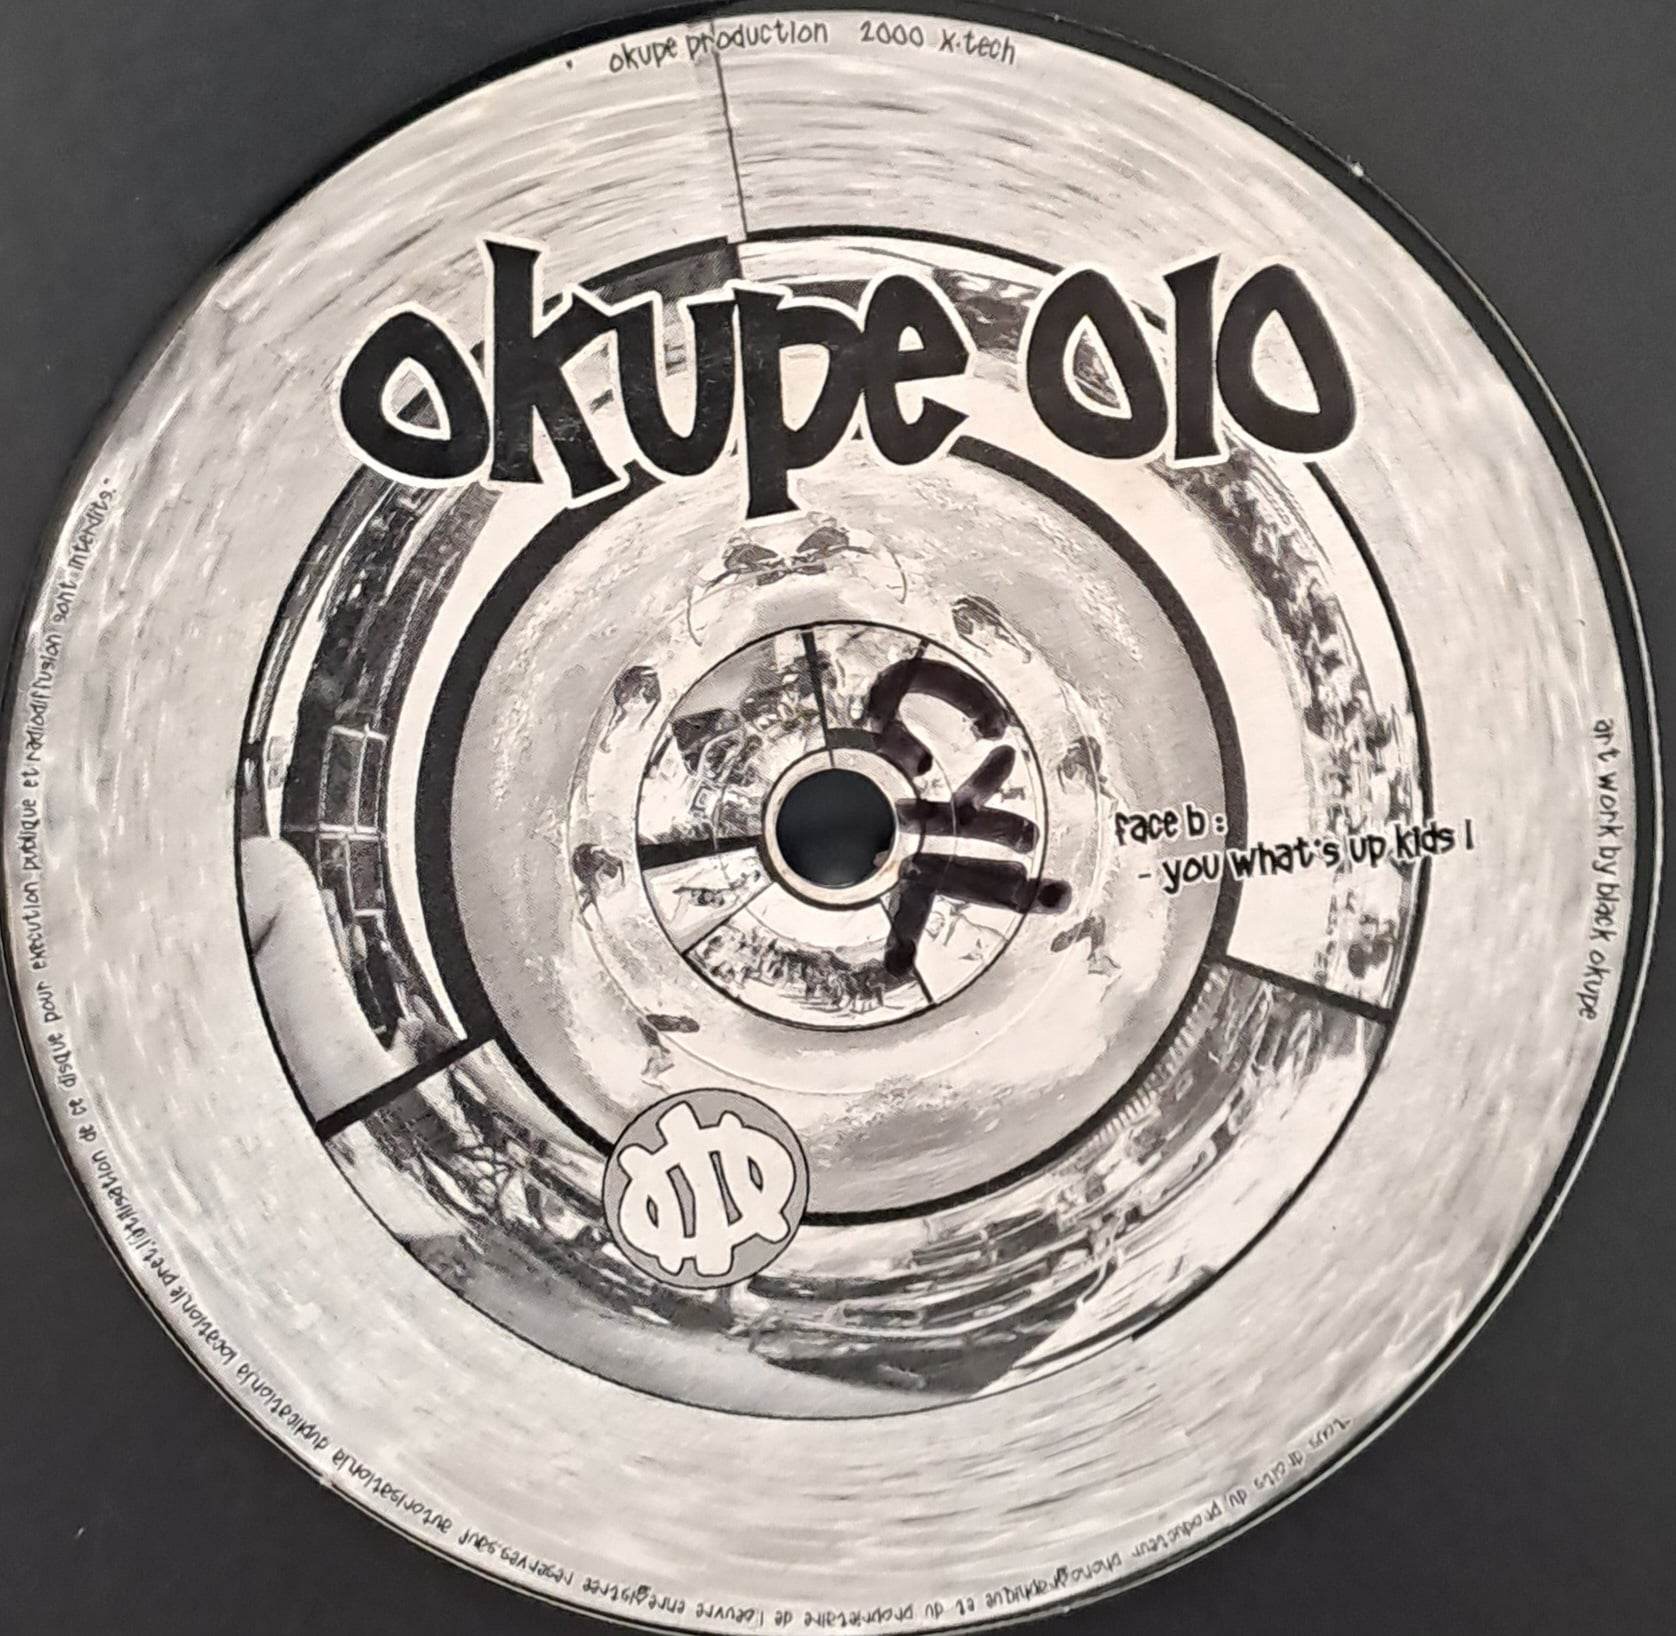 2) Okupe 10 - vinyle freetekno